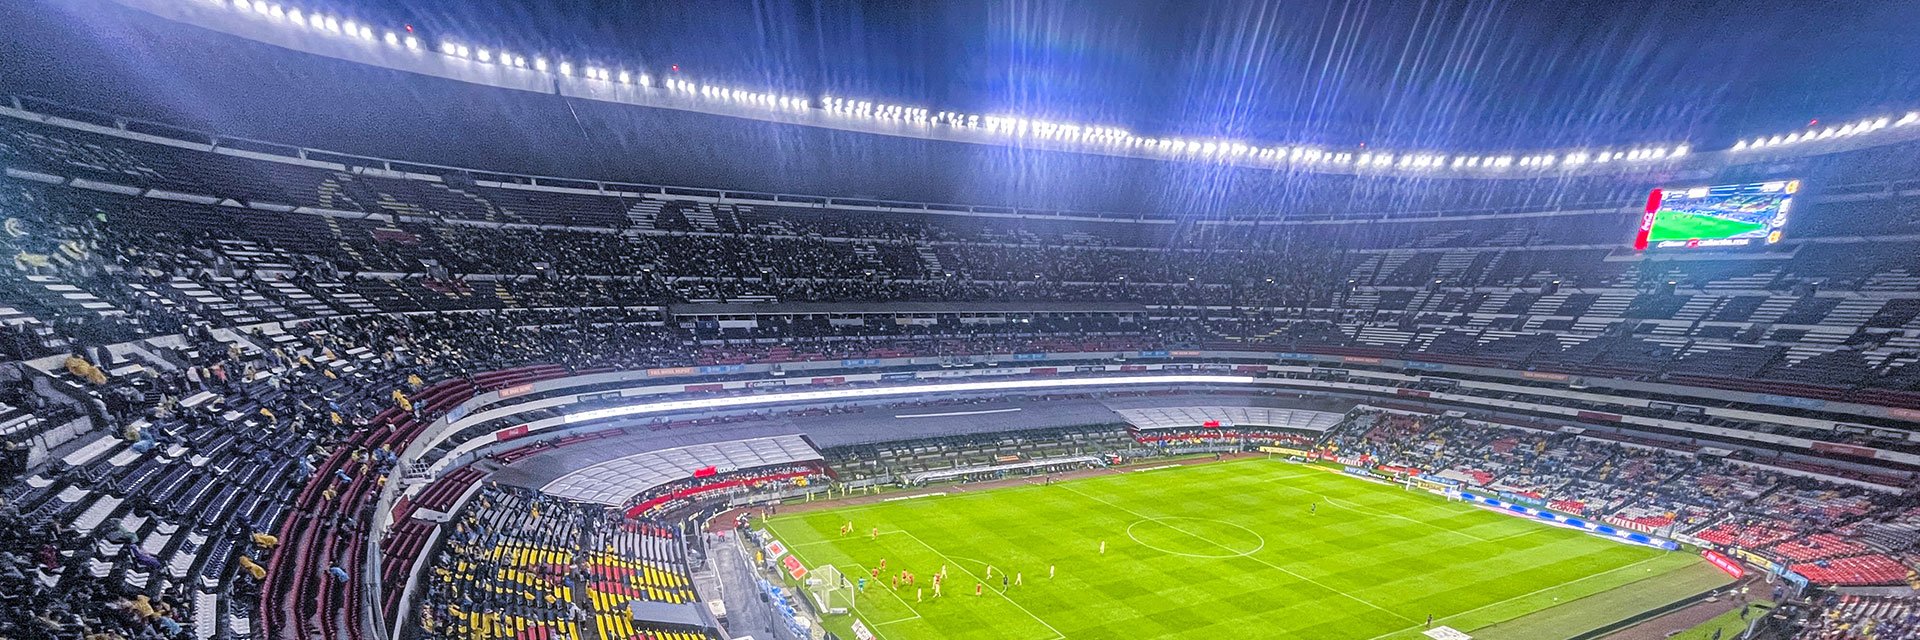 2022_Futbol_Mex_05.jpg